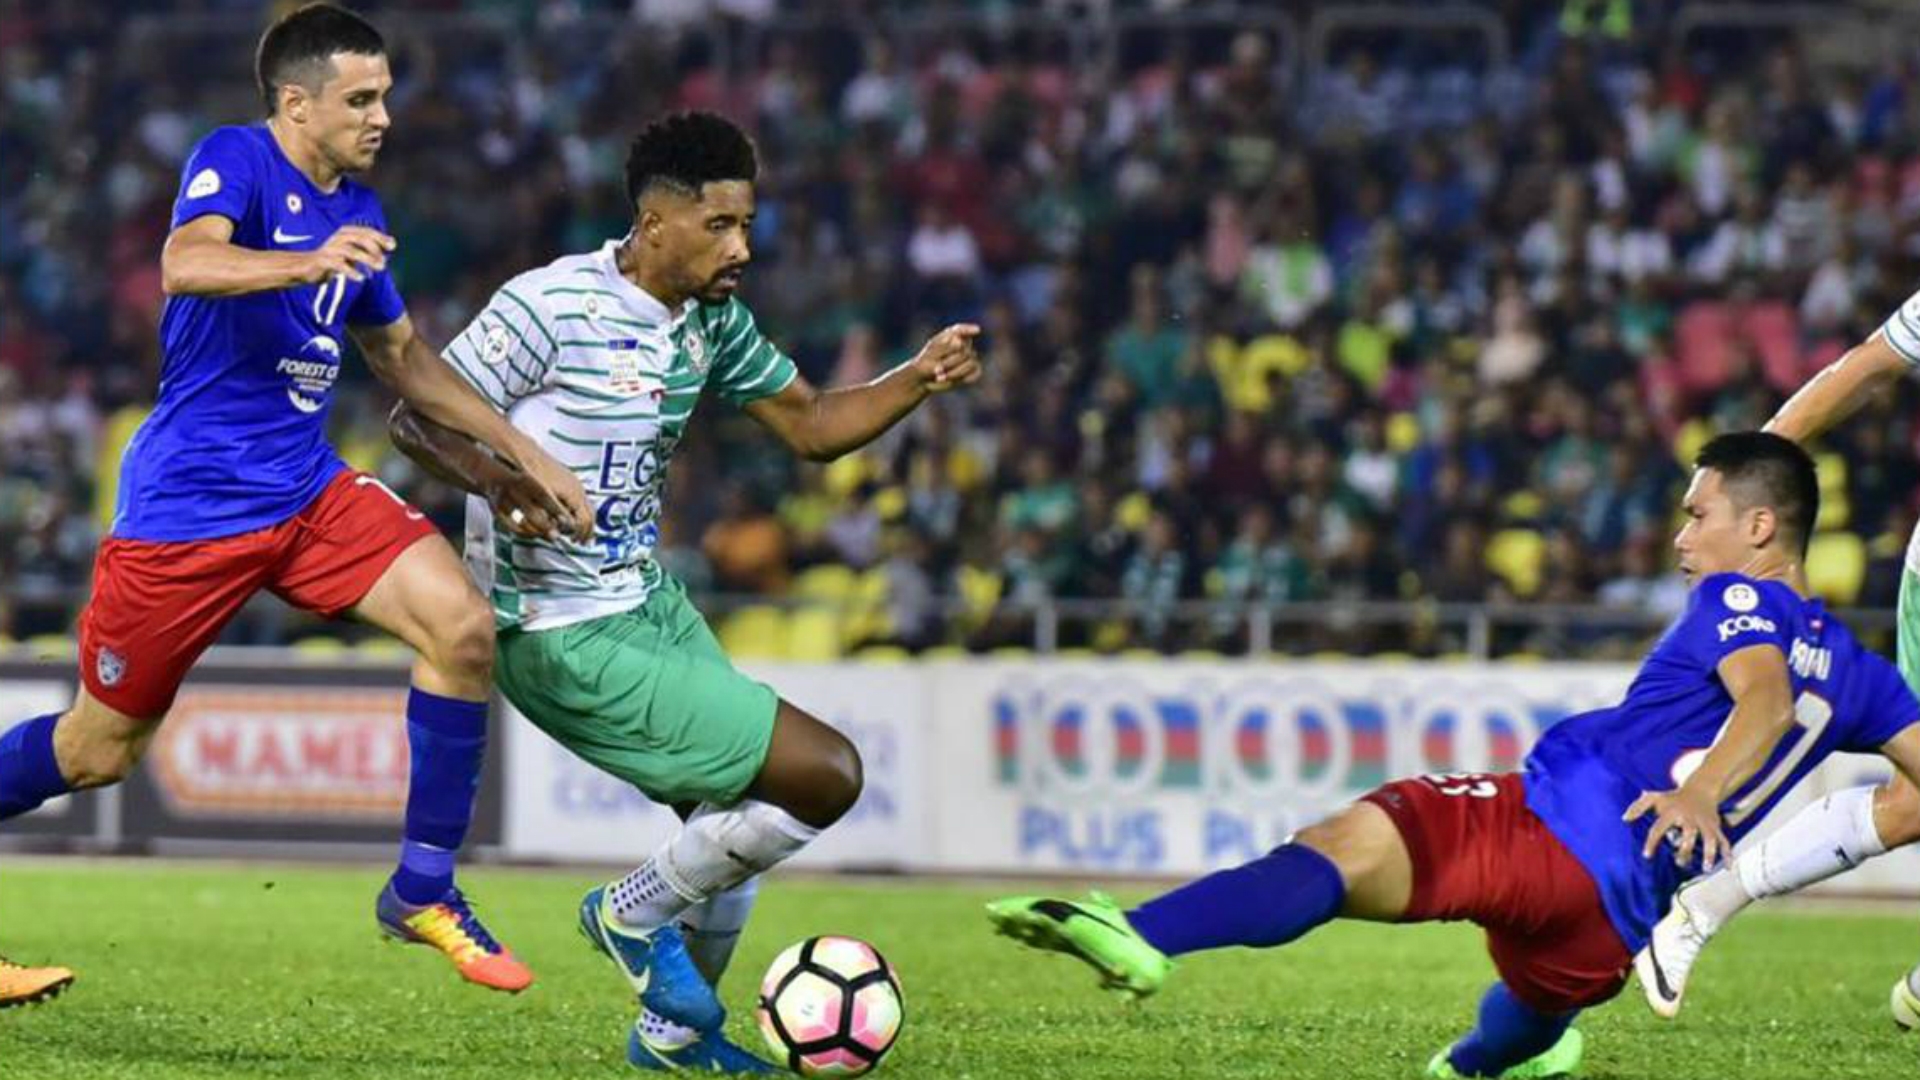 Johor Darul Ta'zim vs Melaka United